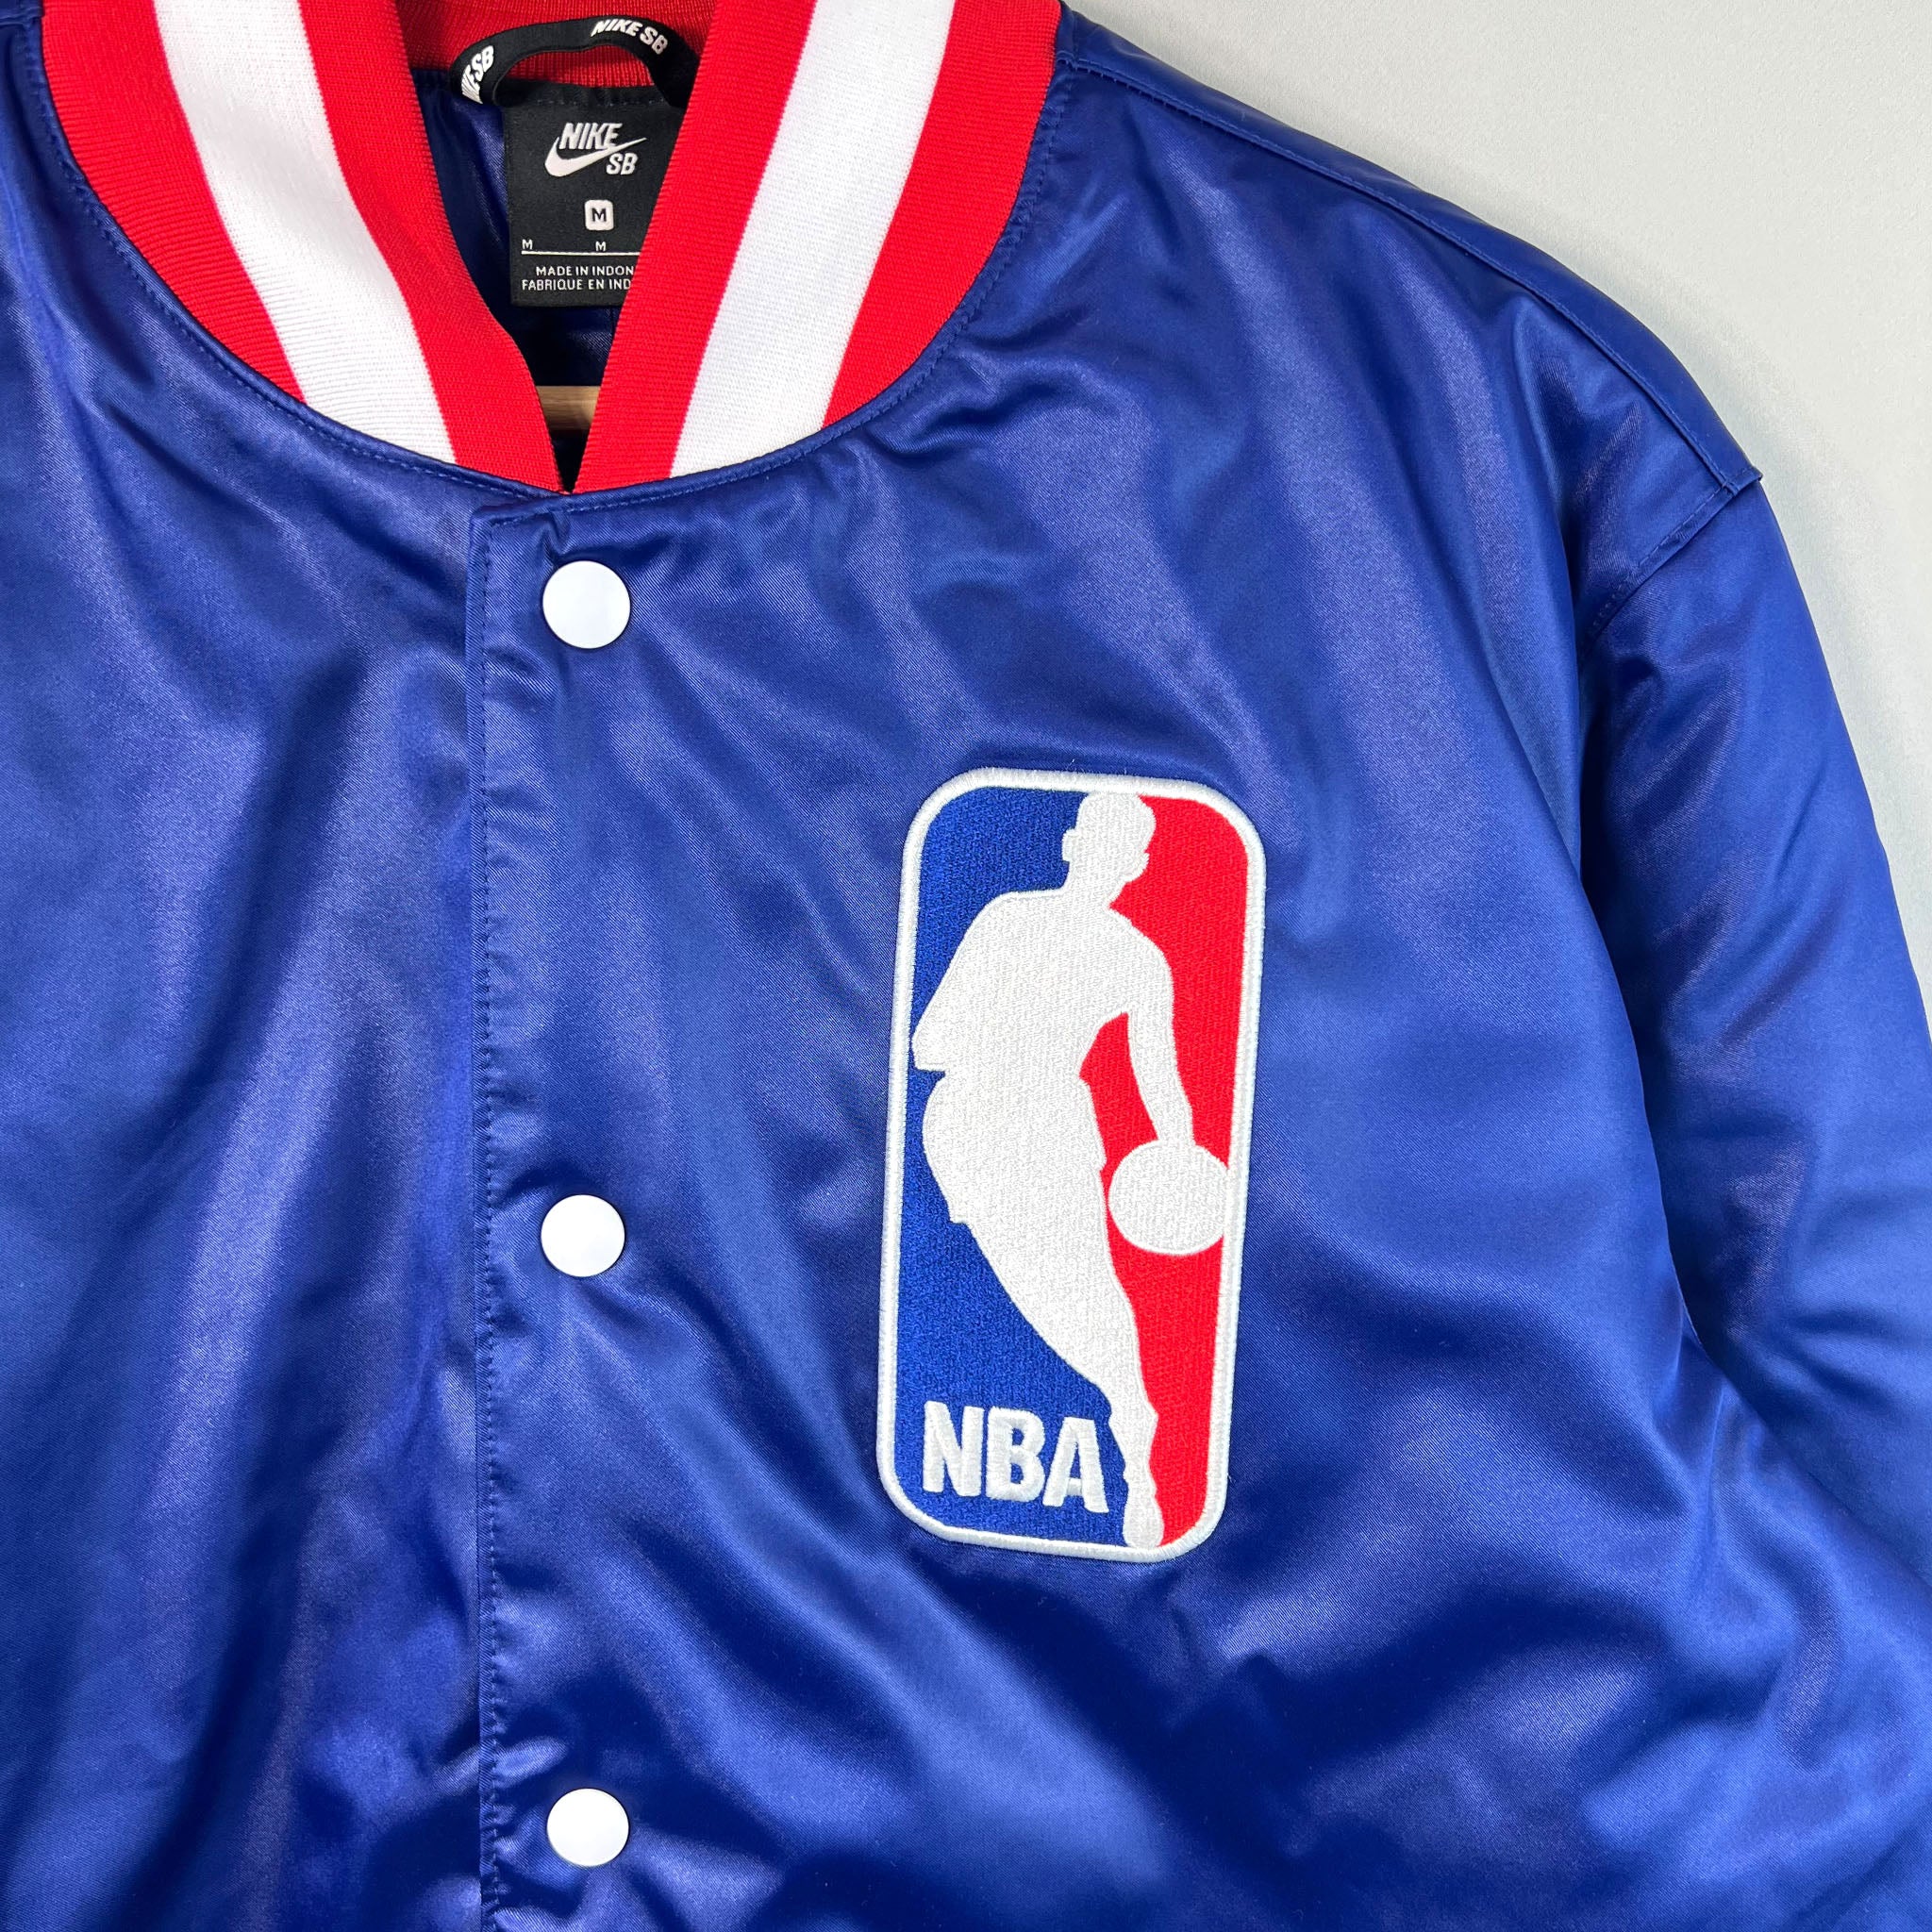 Nike SB x NBA Bomber Jacket – Caltone